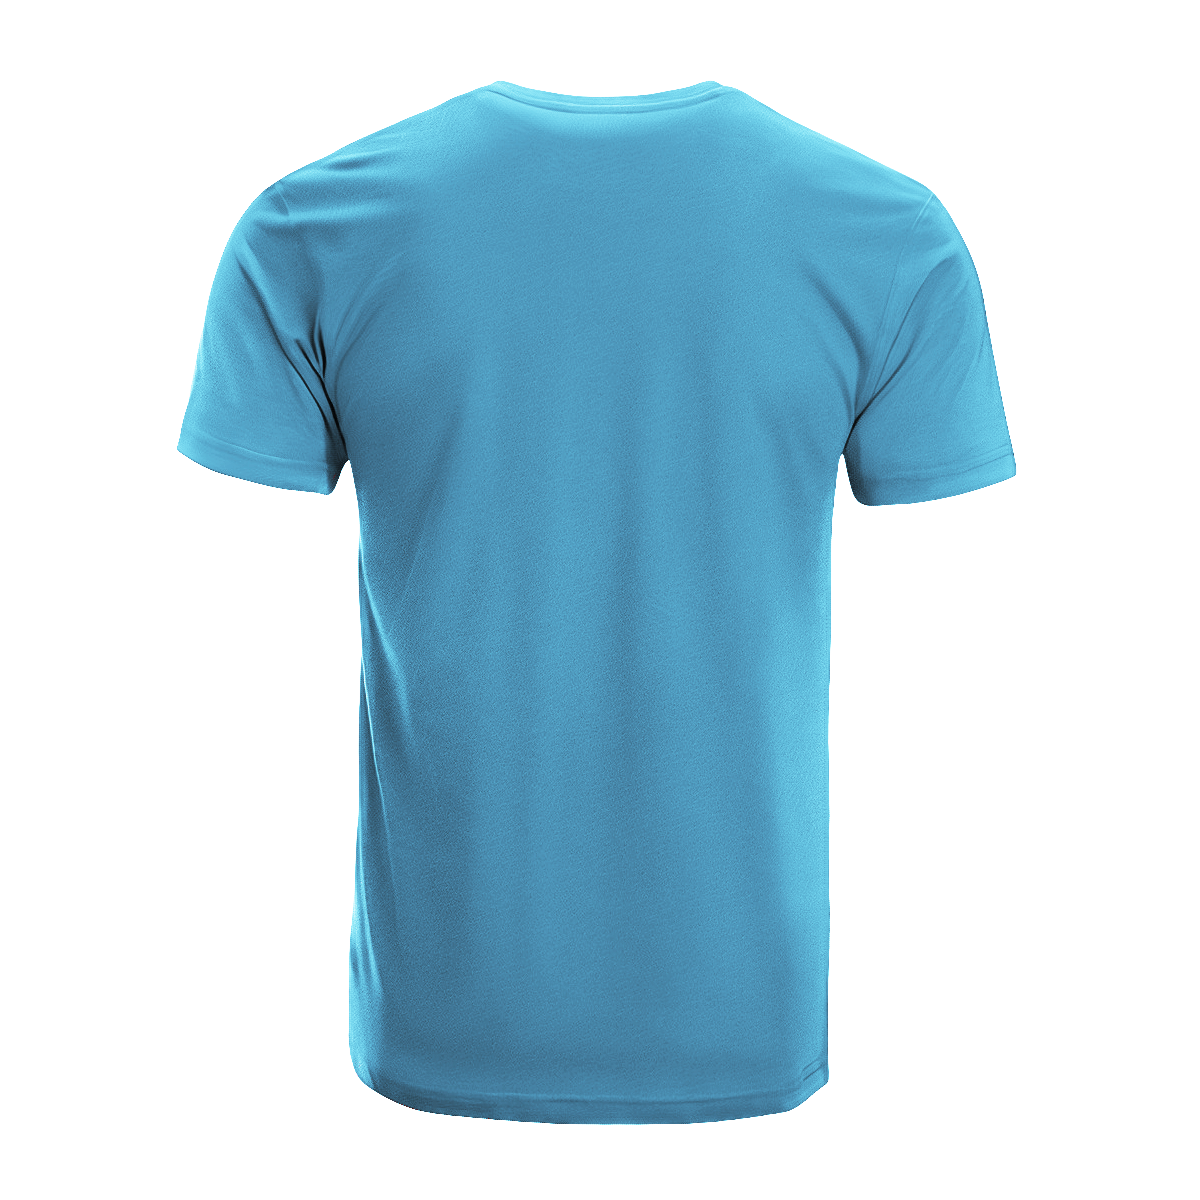 Weir Tartan Crest T-shirt - I'm not yelling style